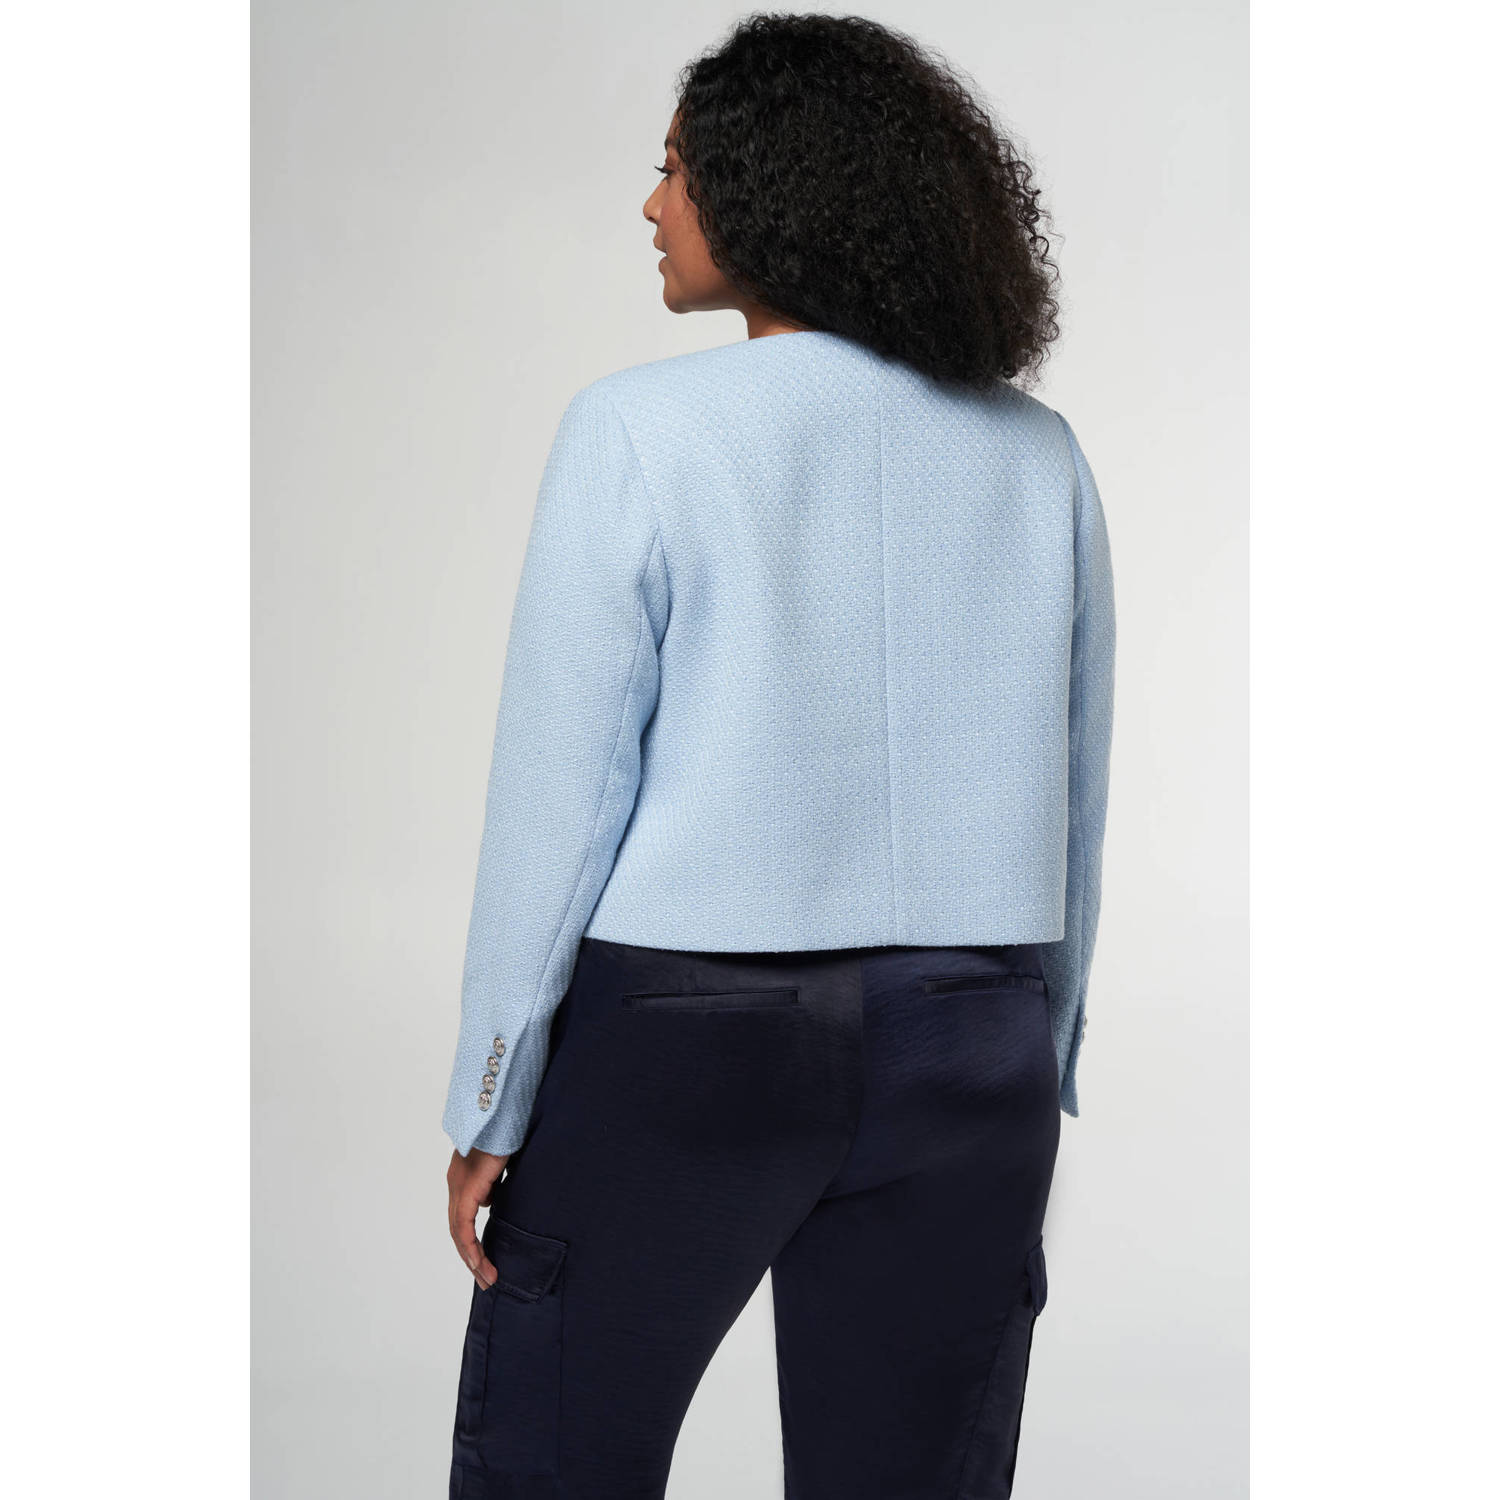 MS Mode tweed jasje lichtblauw